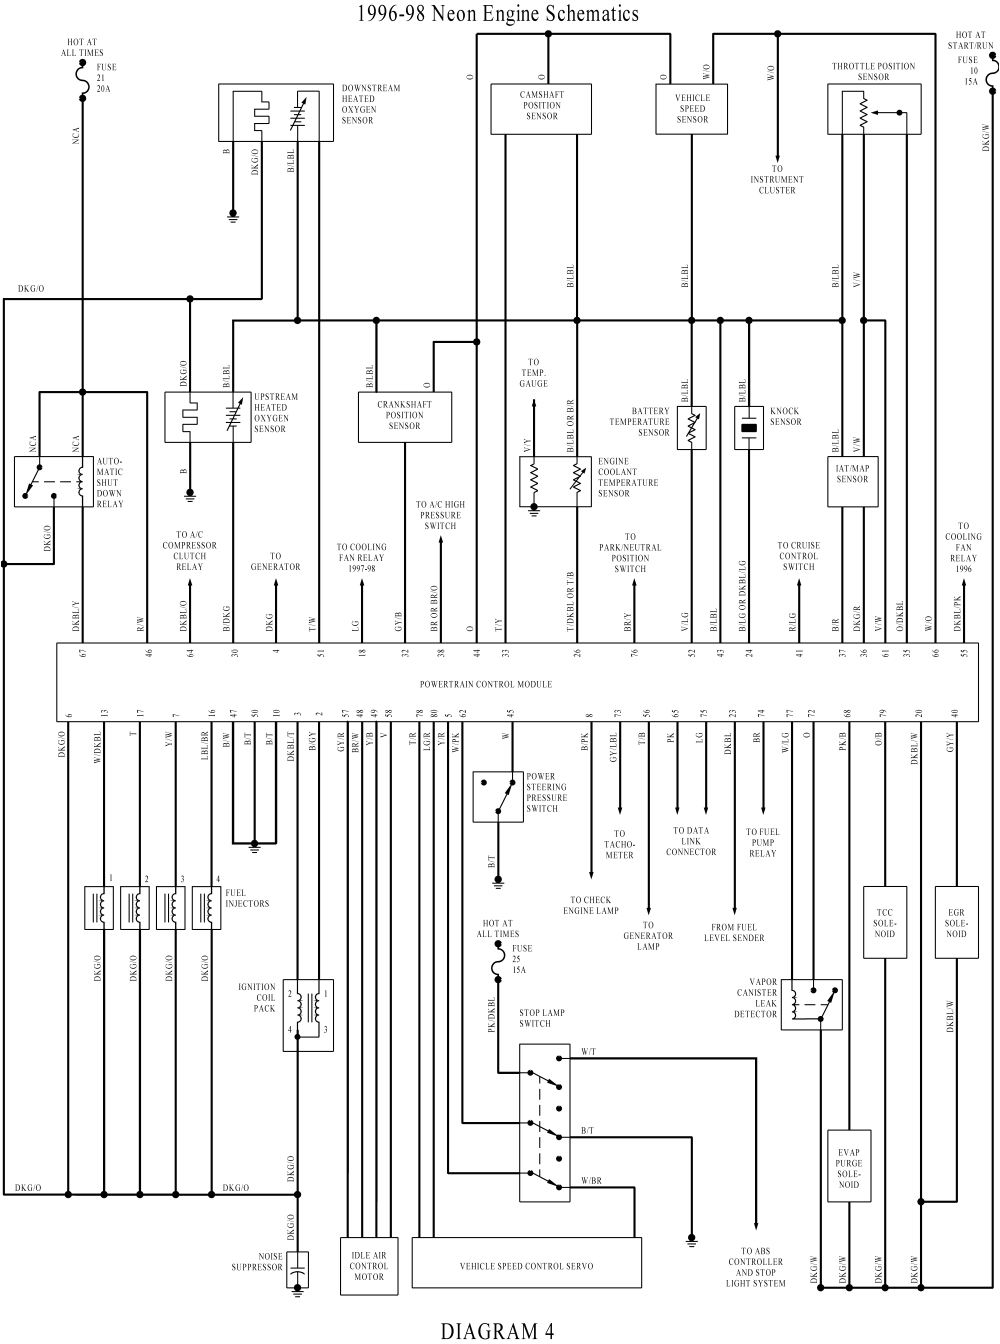 wiring diagram for dodge neon wiring diagram sheet 96 dodge neon spark plug wire diagram 96 dodge neon wiring diagram